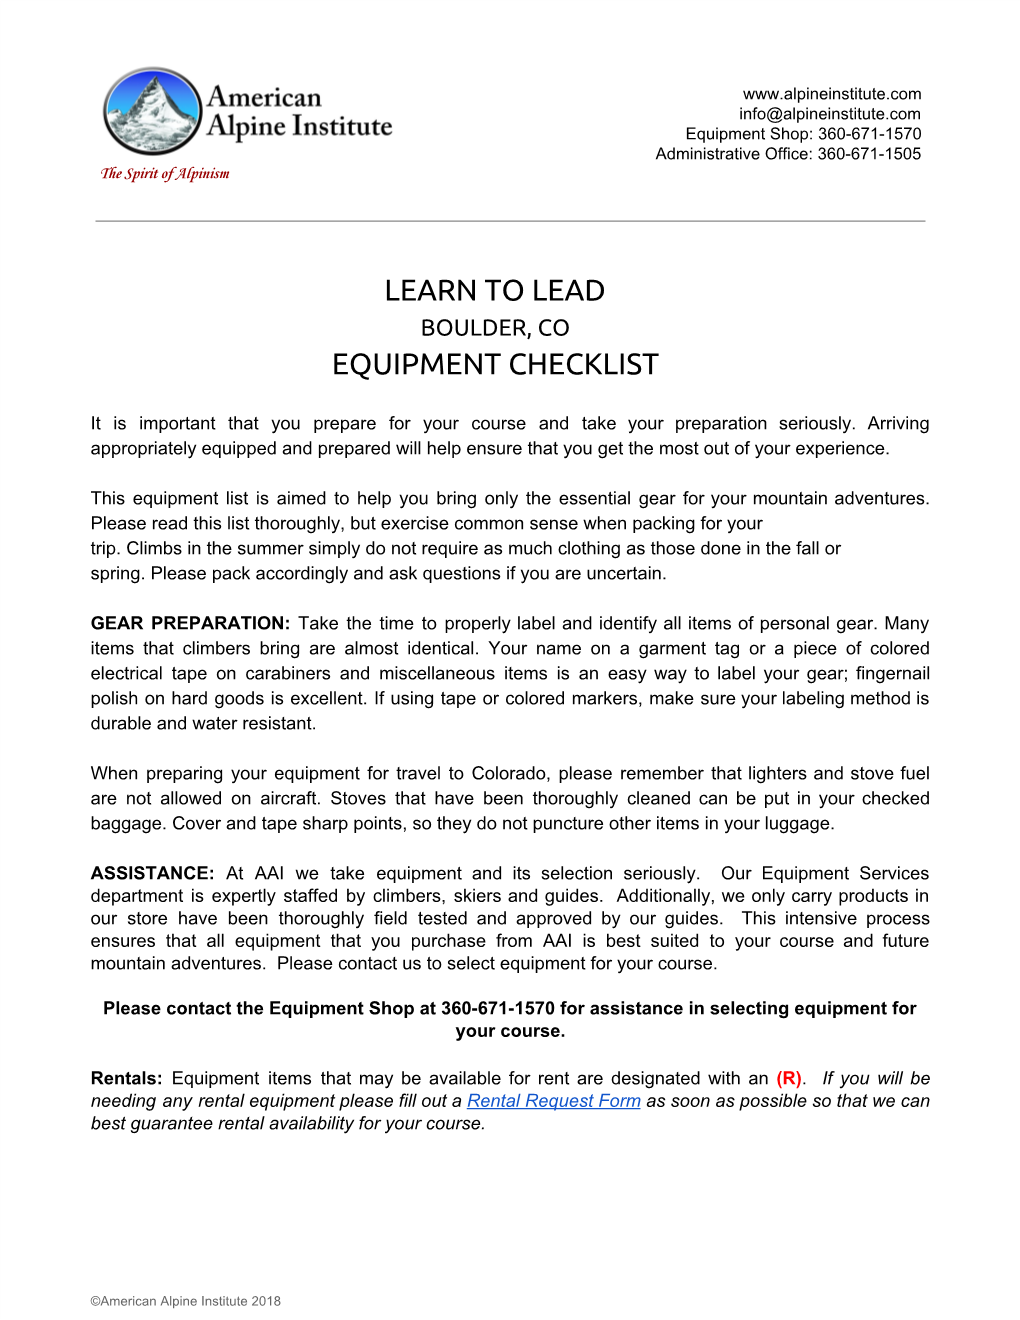 Learn to Lead Equipment Checklist